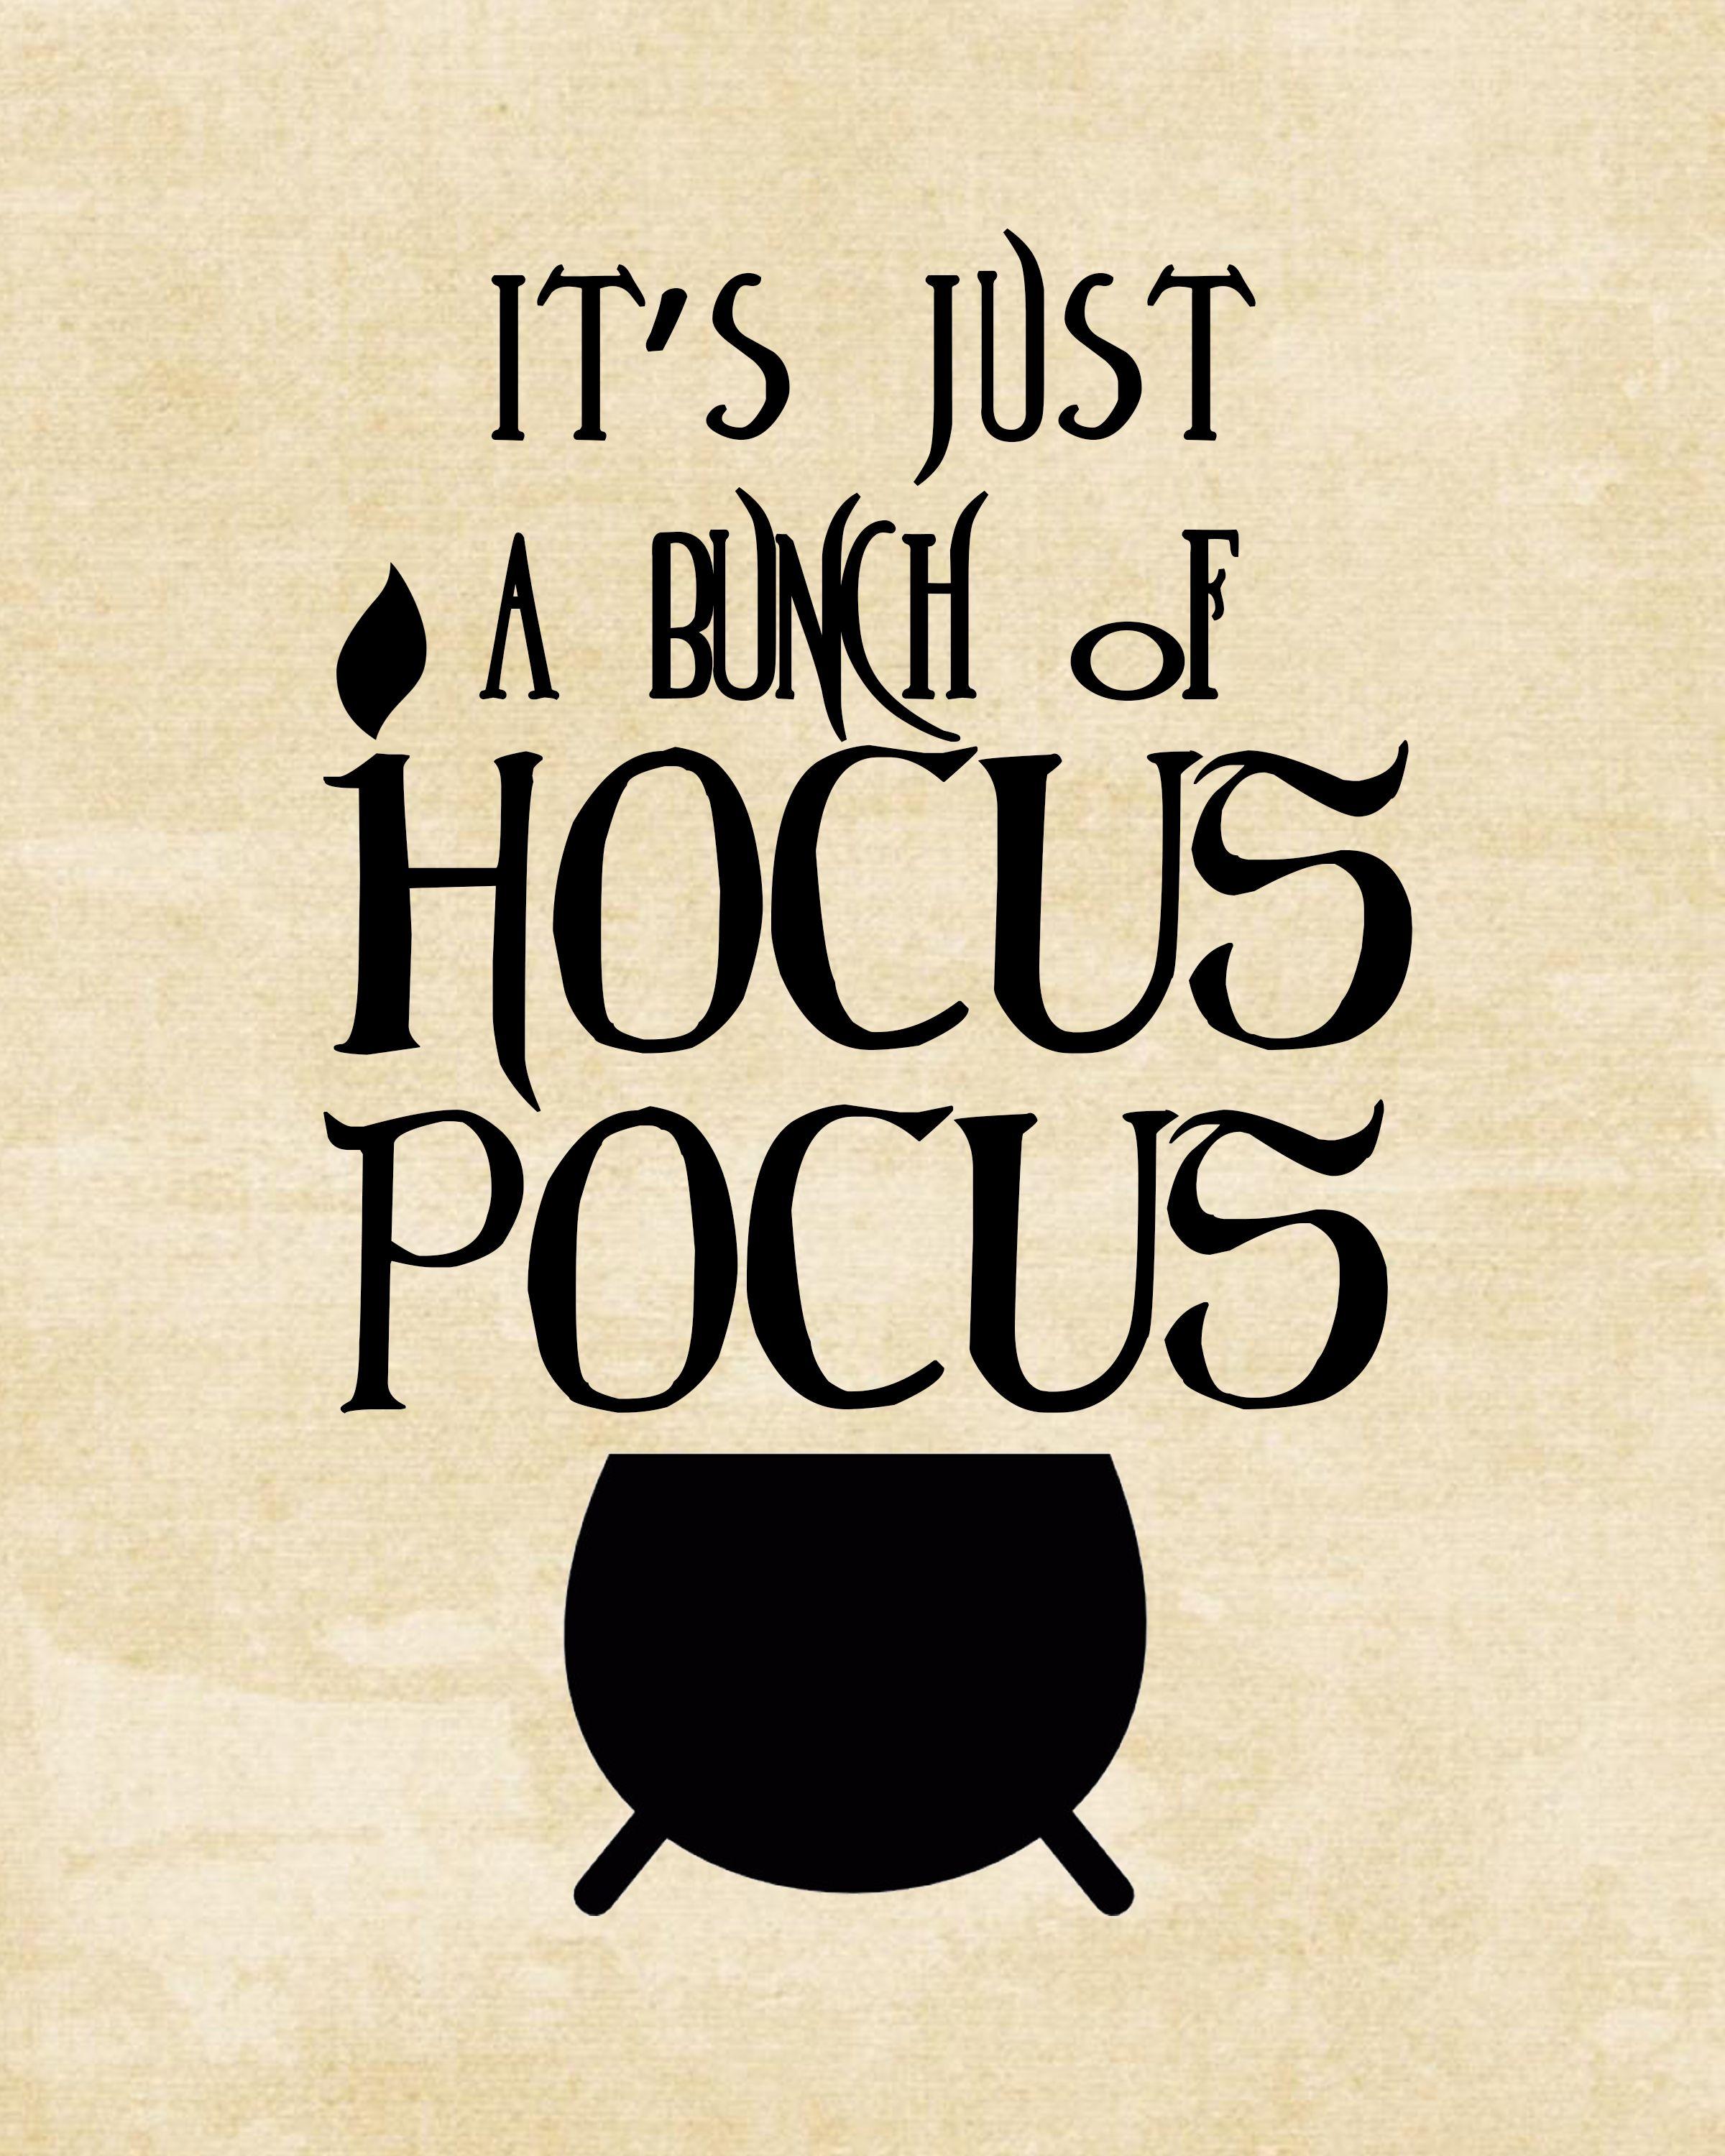 Hocus Pocus Quotes Wallpapers Top Free Hocus Pocus Quotes Backgrounds Wallpaperaccess